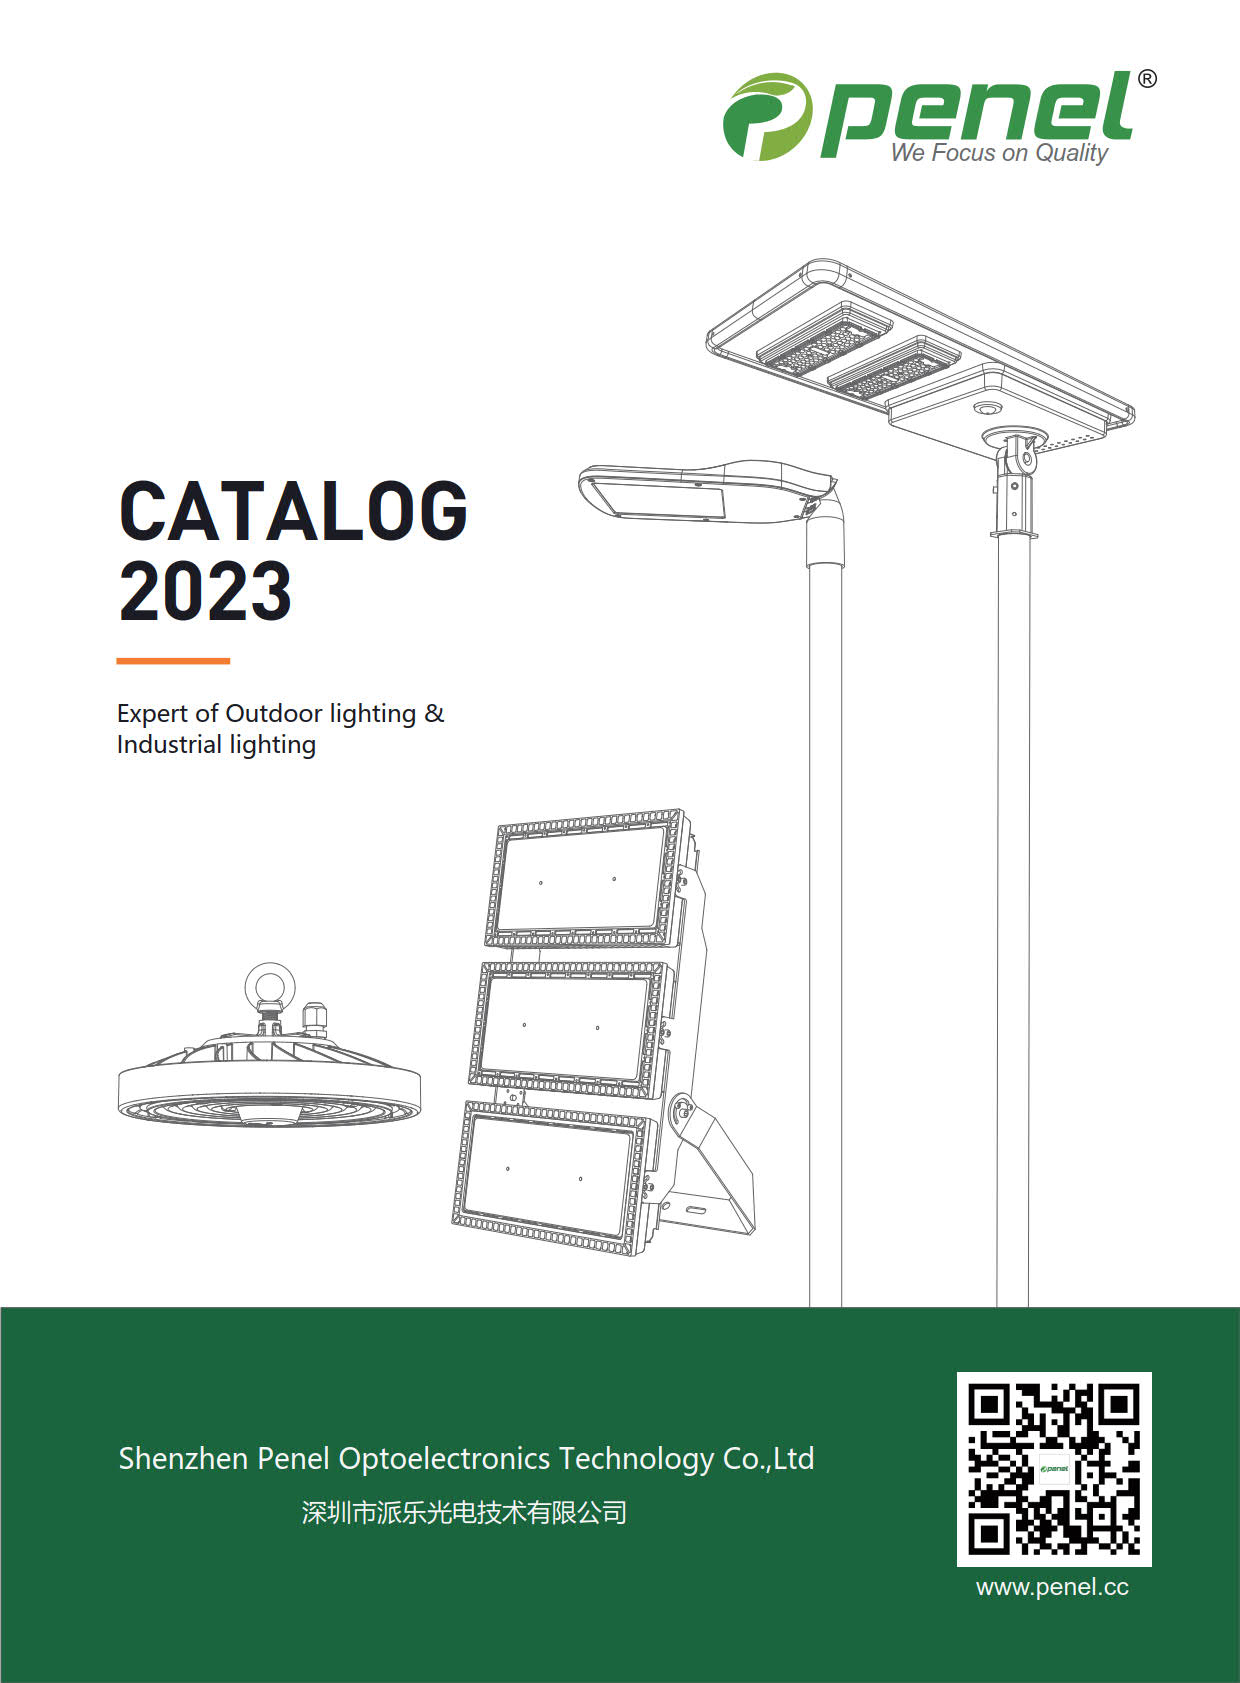 PENEL Catalogue 2023